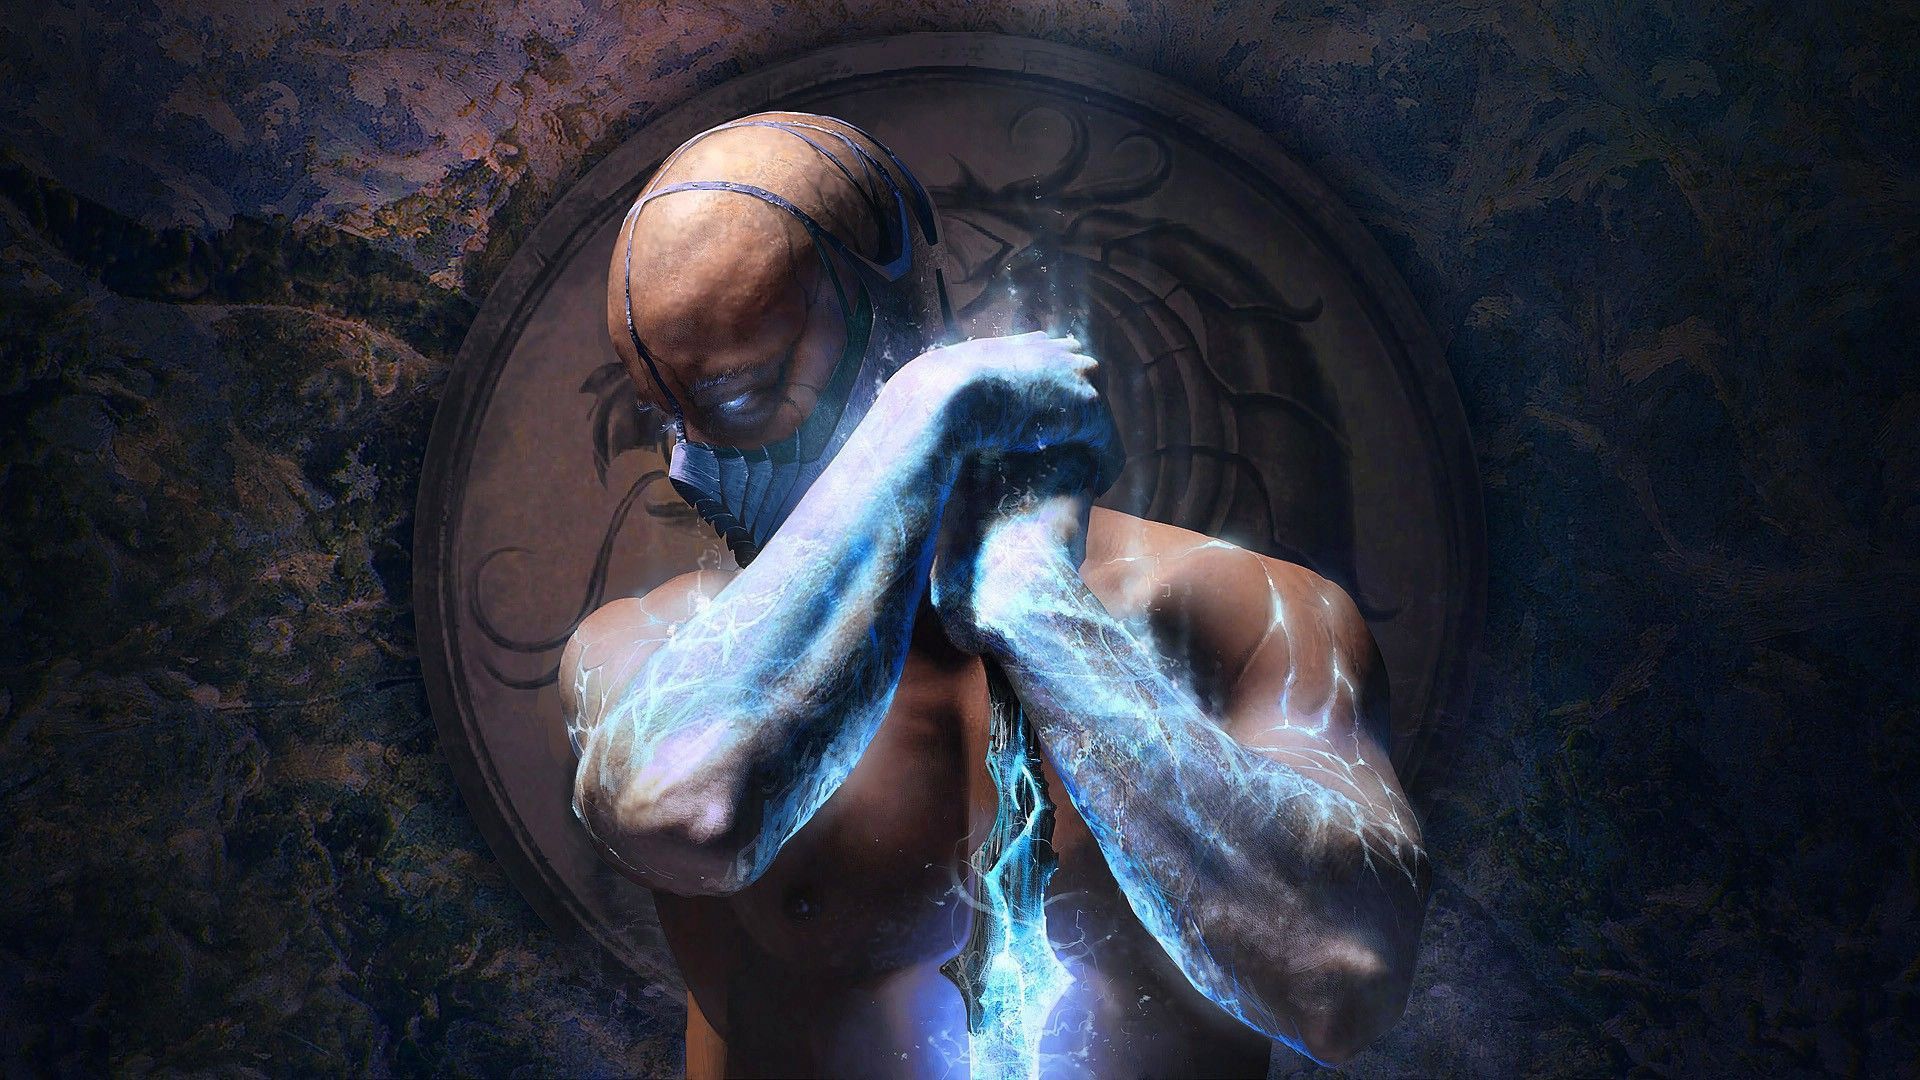 Mortal Kombat X Video Game 23 Background Wallpaper - Hivewallpaper.com